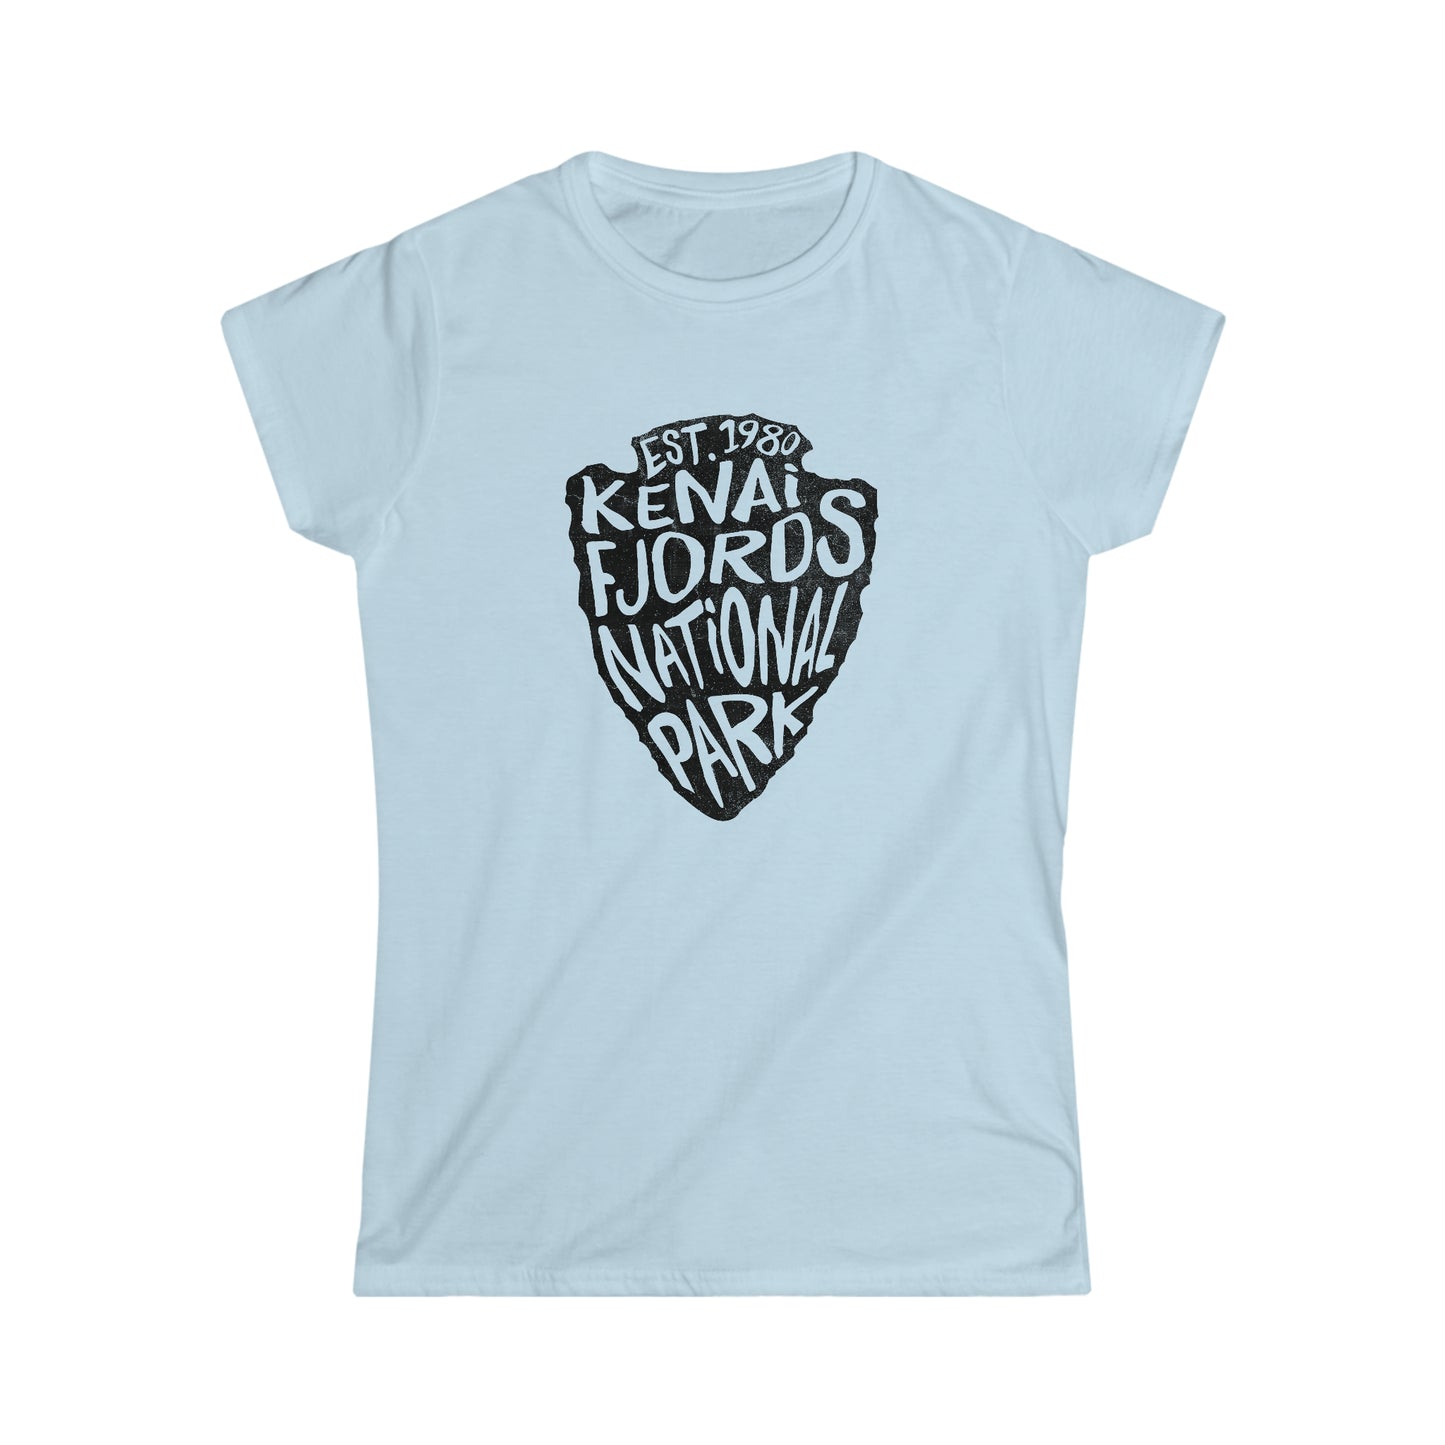 Kenai Fjords National Park Women's T-Shirt - Arrowhead Design